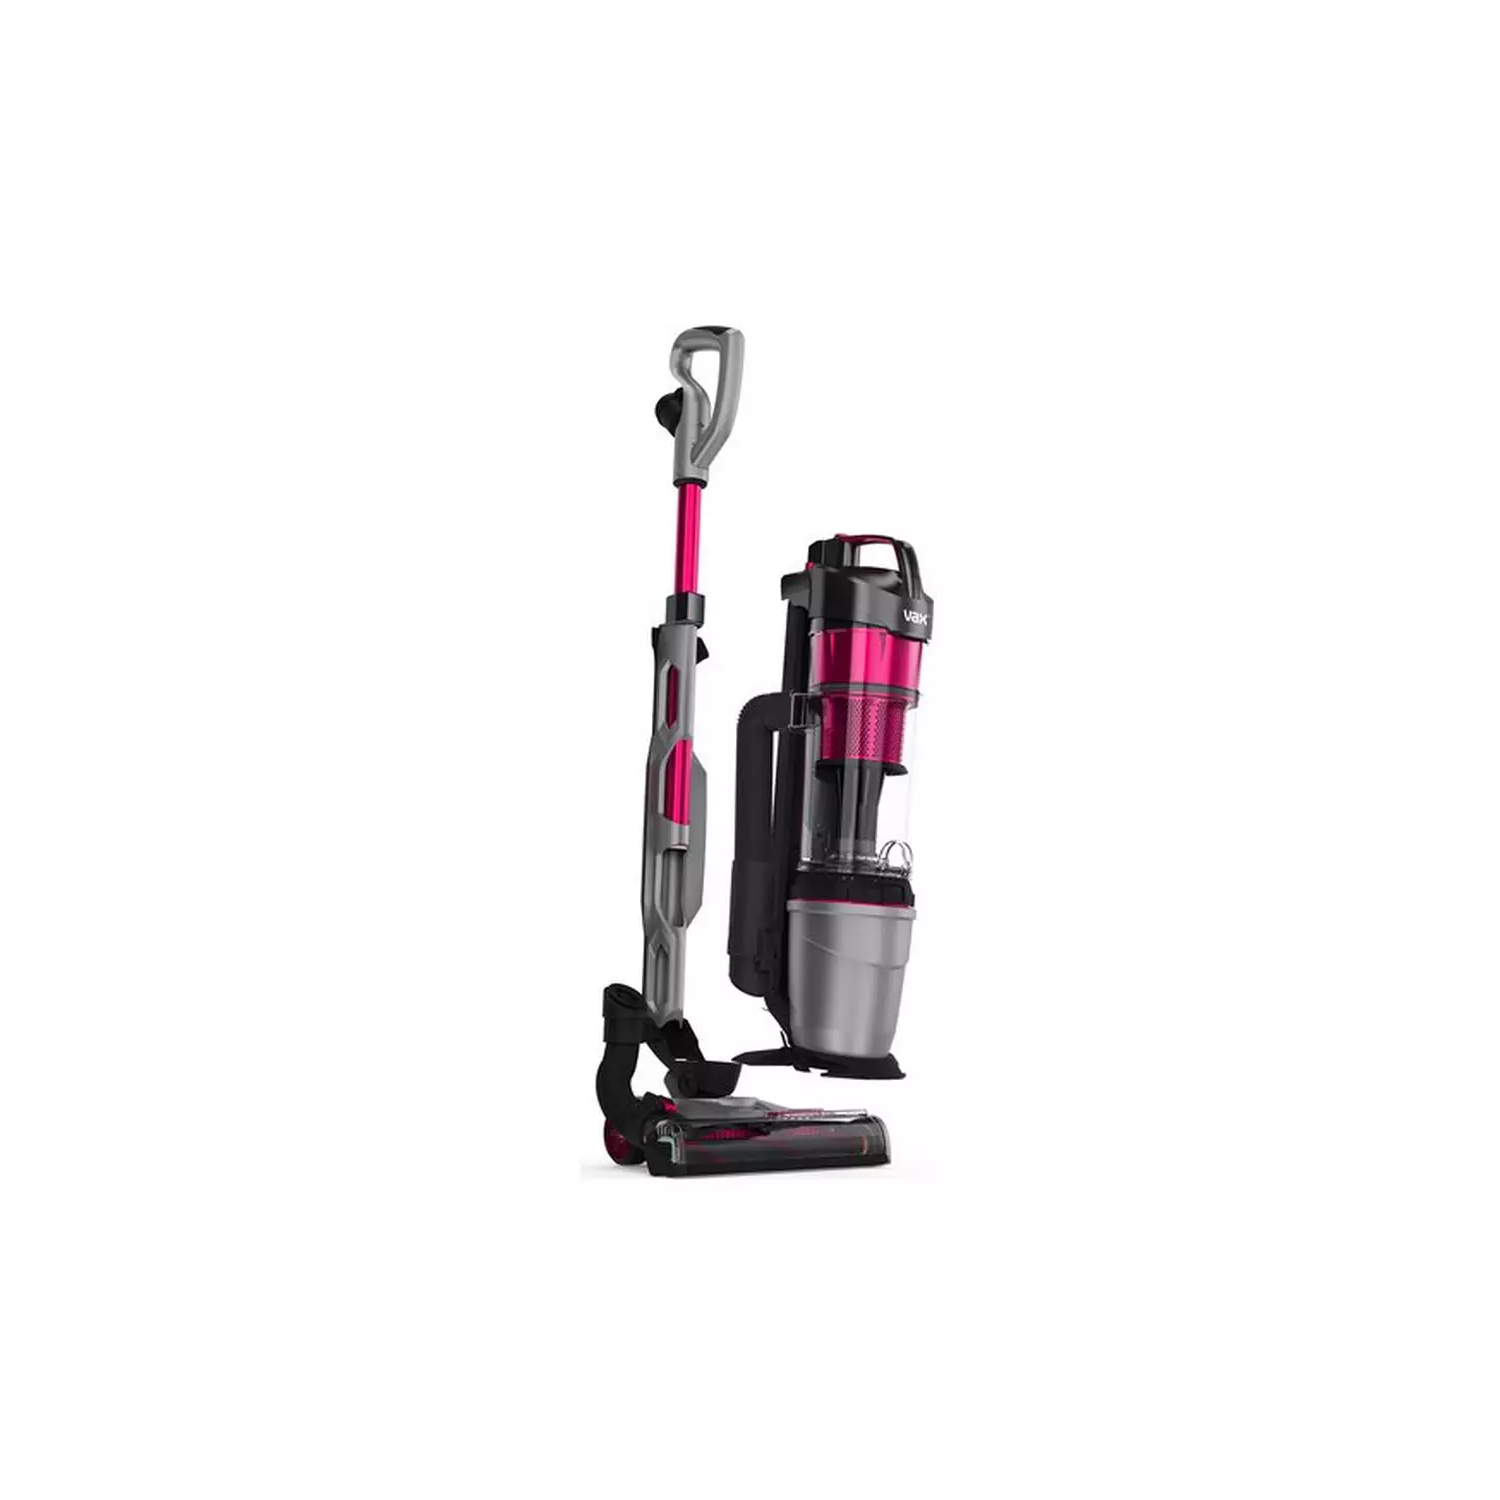 VAX Air Lift Steerable Pet Max UCPMSHV1 Upright Bagless Vacuum Cleaner – Black & Pink